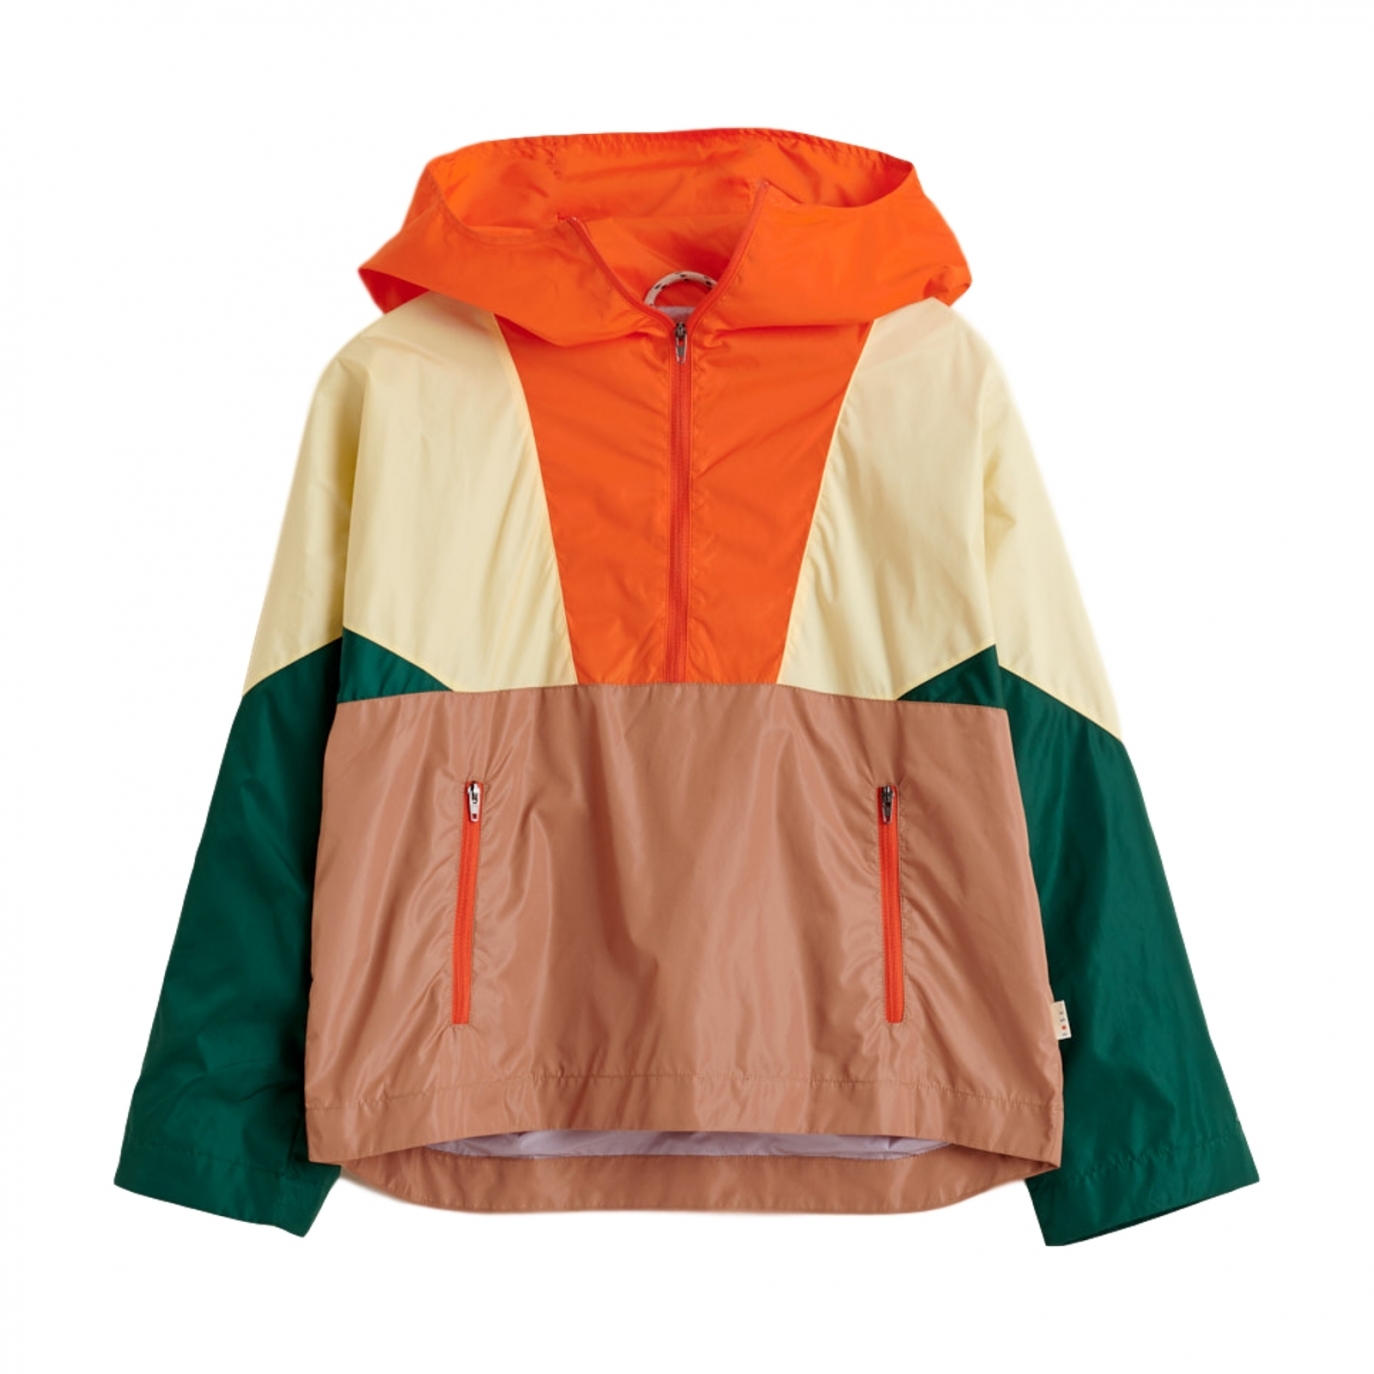 Bellerose - Hoodie Jacket Orange - コート、ジャケット、カバーオール - BK201503 P1135 